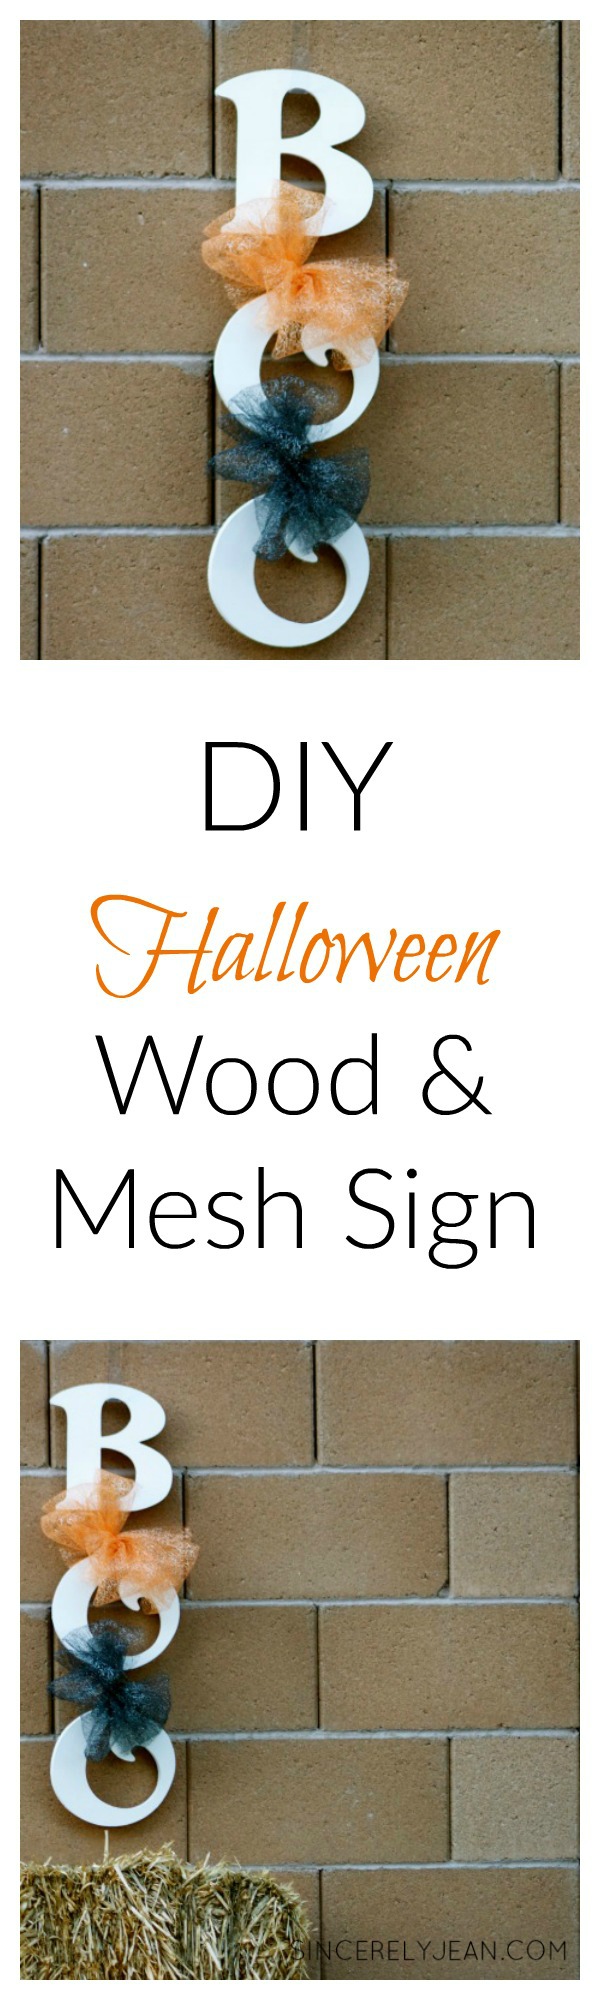 DIY Easy Halloween Wood Hanging sign